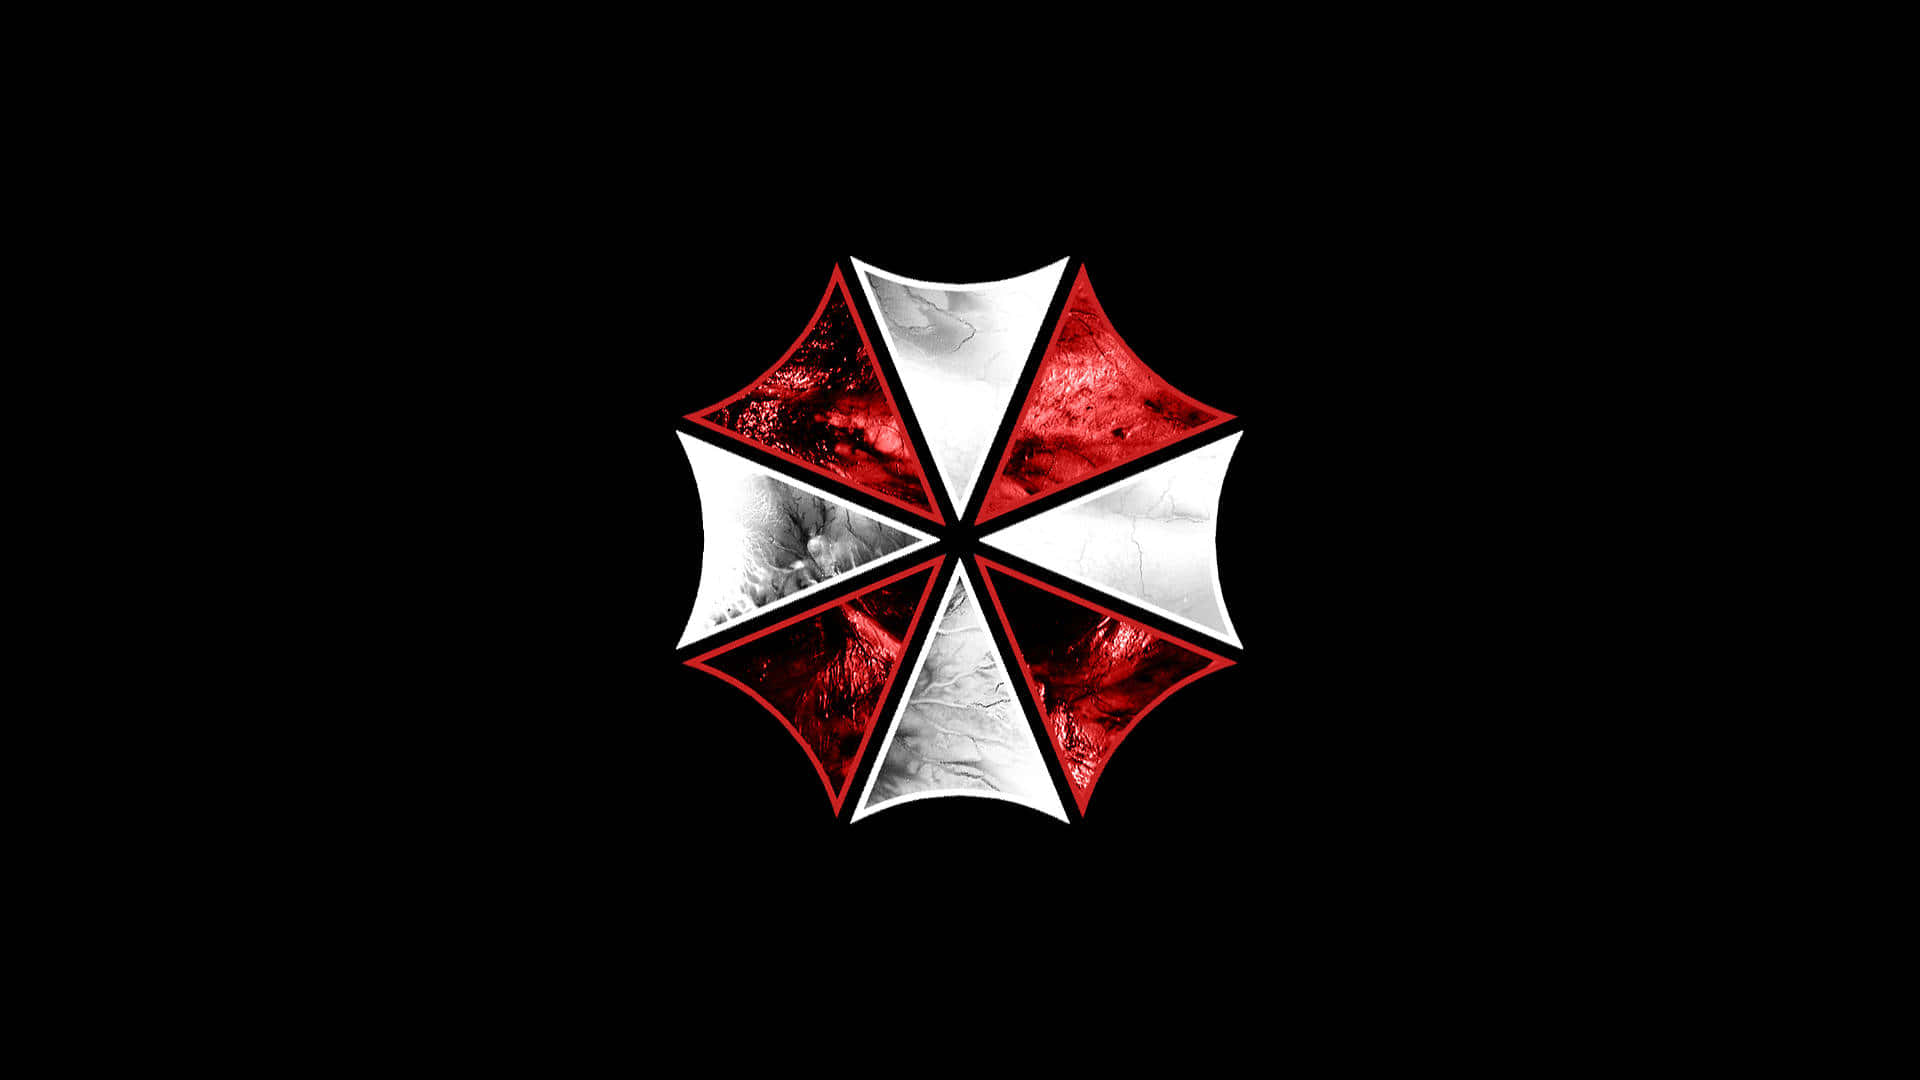 Abstract Redand White Umbrella Design Background